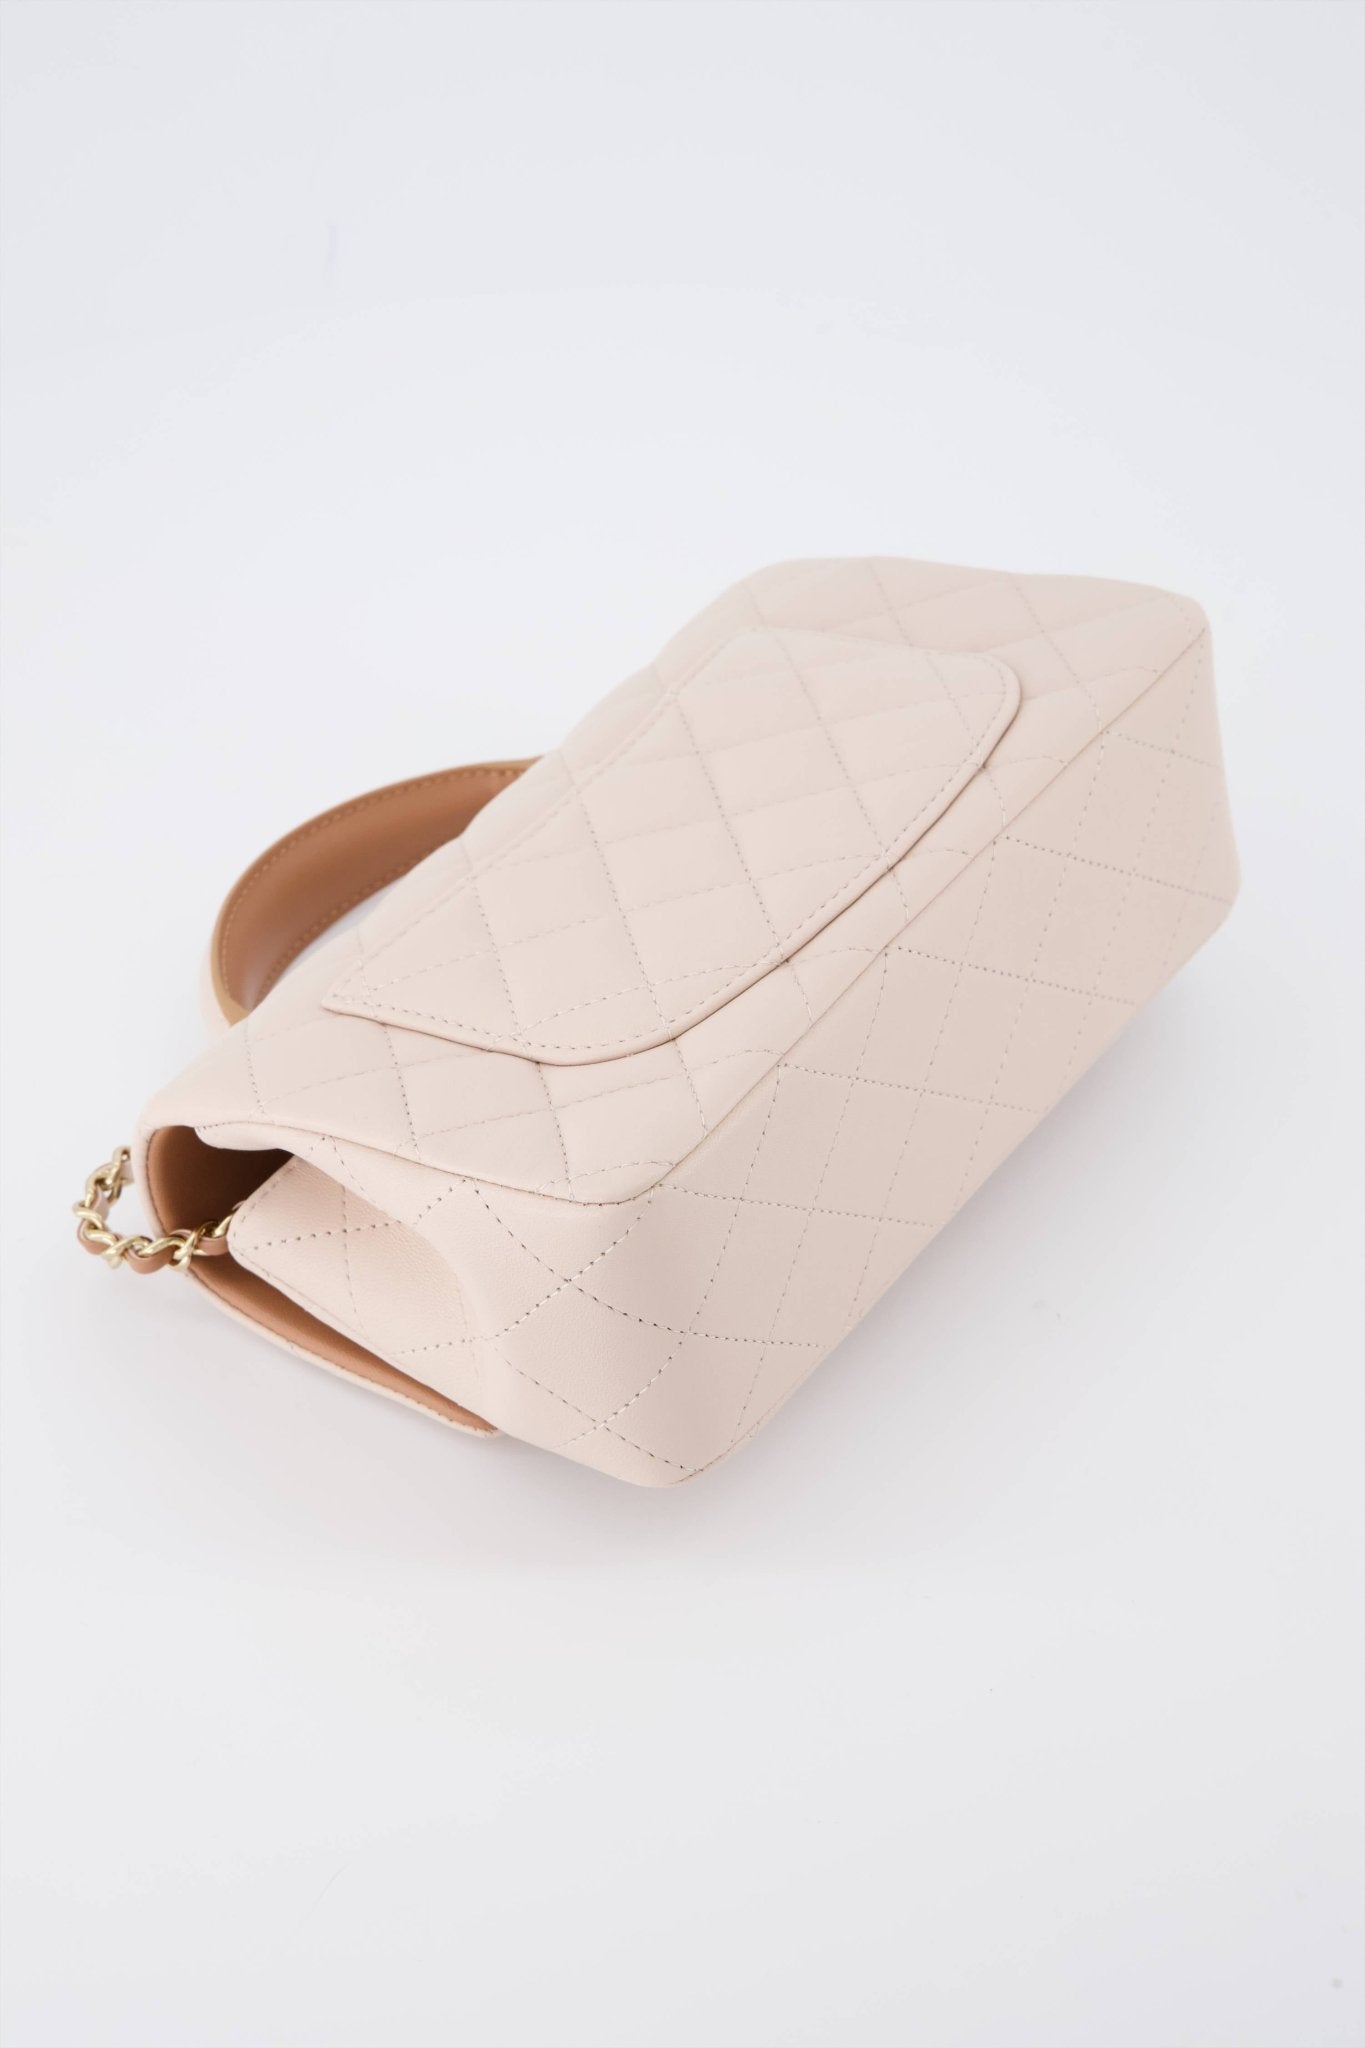 Chanel Mini Handbag Ecru